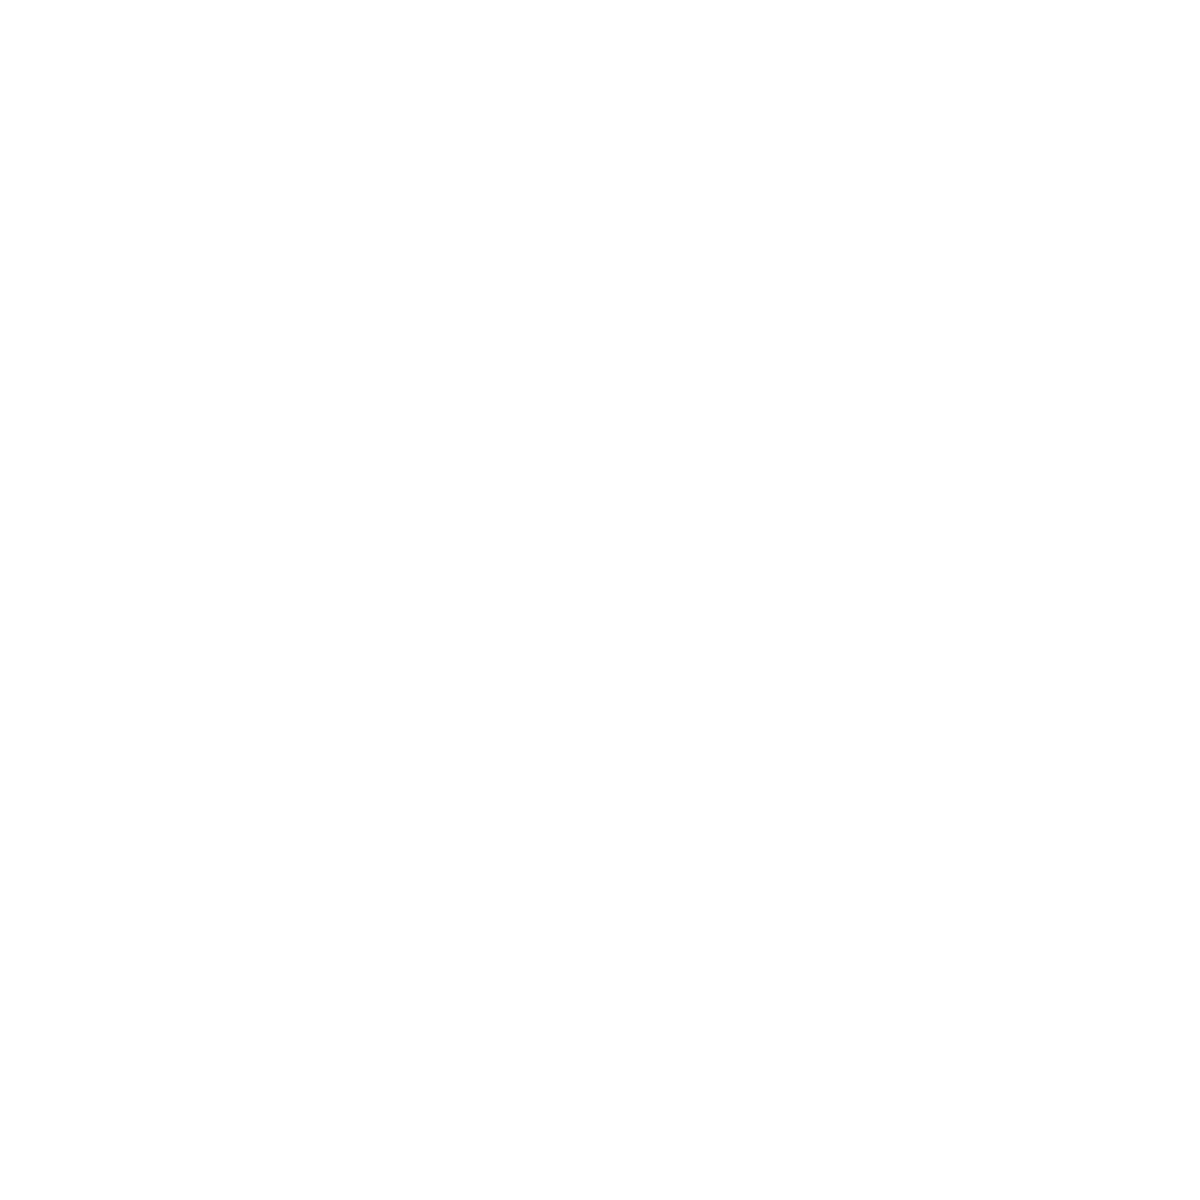 Envy's logo